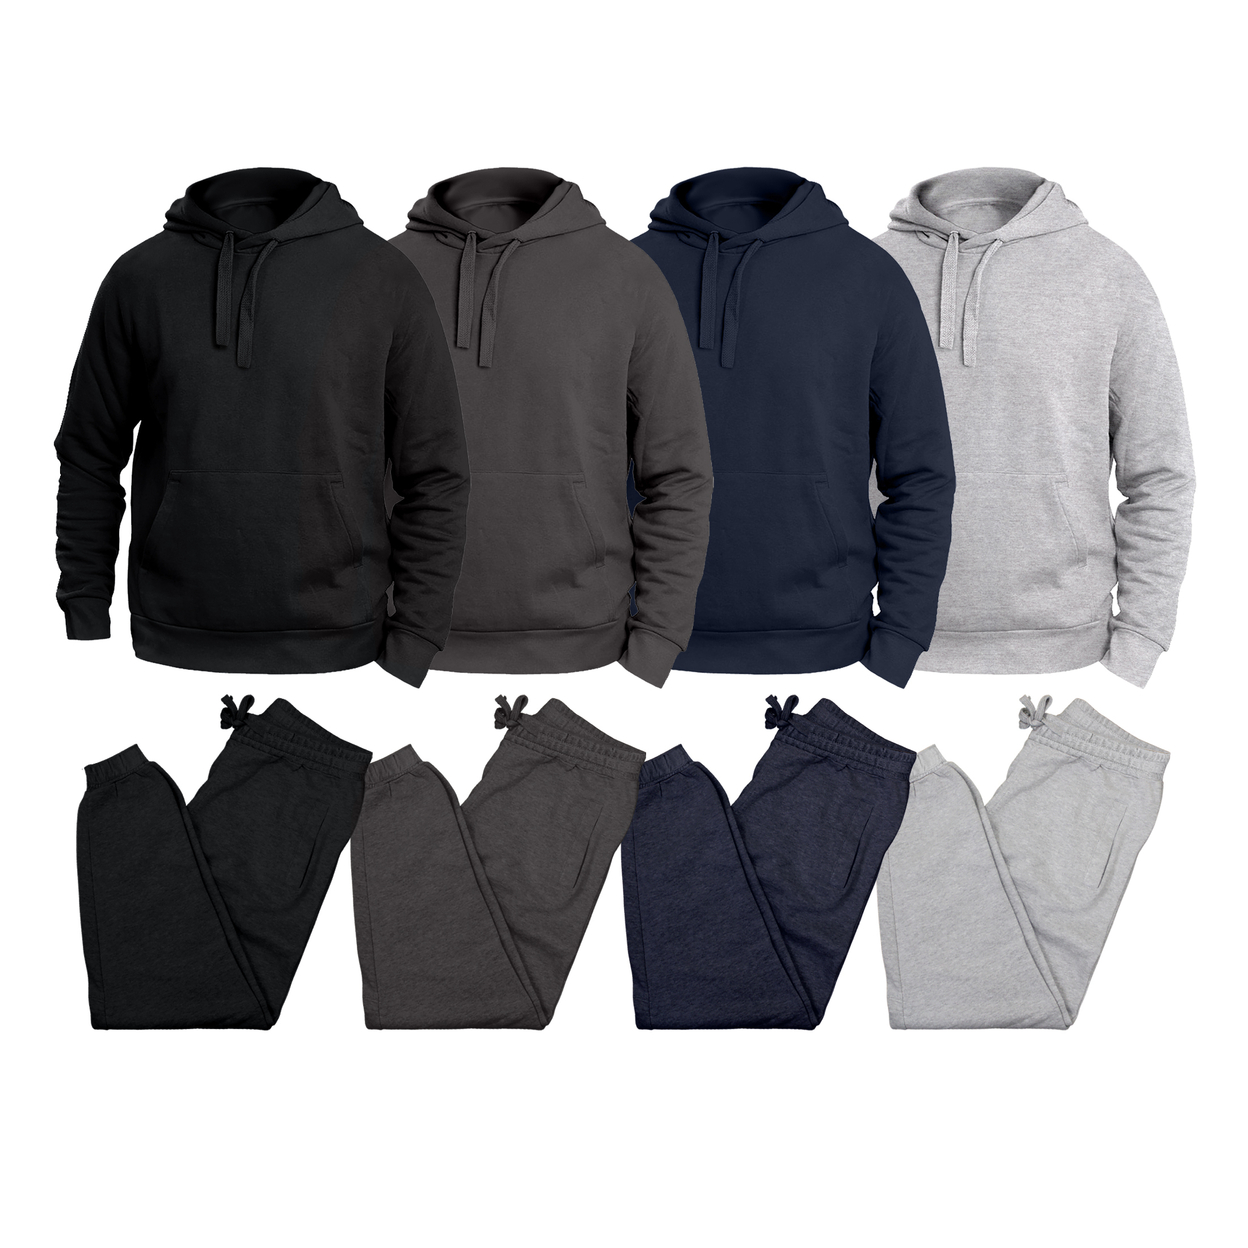 Multi-Pack: Big & Tall Men's Winter Warm Cozy Athletic Fleece Lined Multi-Pocket Cargo Sweatsuit - Grey, 1-pack, 3xl